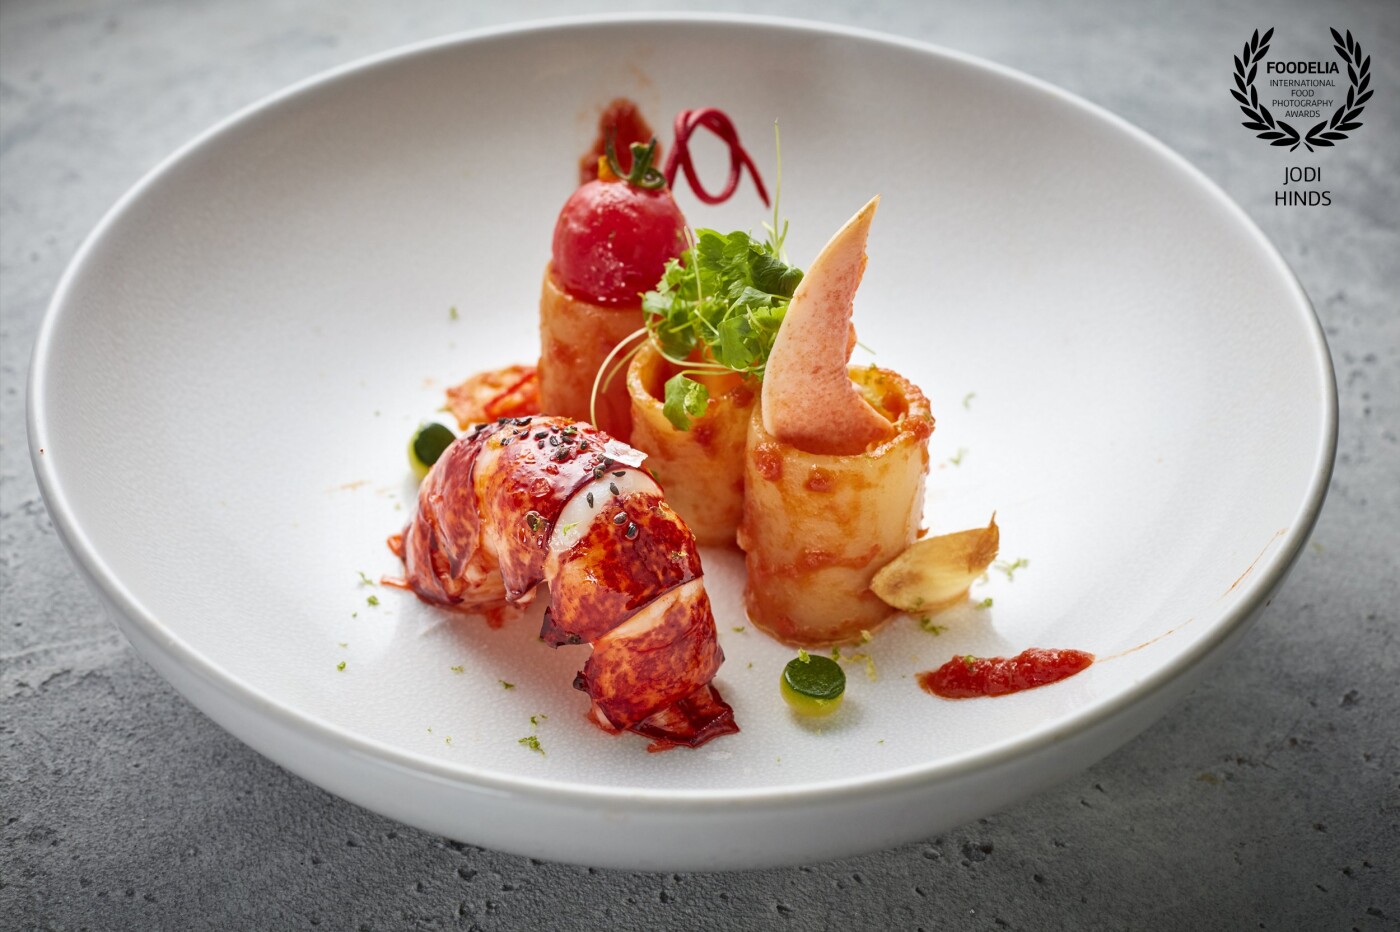 Langoustine and Prawn Filled Ravioli with Spicy Lobster Broth by Chef Antonio (Lello) Favuzzi<br />
Shot for the new launch of @SeasonedbyChefs online culinary masterpiece.<br />
<br />
Publication: @seasonedbychefs<br />
Restaurant: @lanimalondon<br />
Chef: @lello_favuzzi<br />
Photographer: @jodihindsphoto